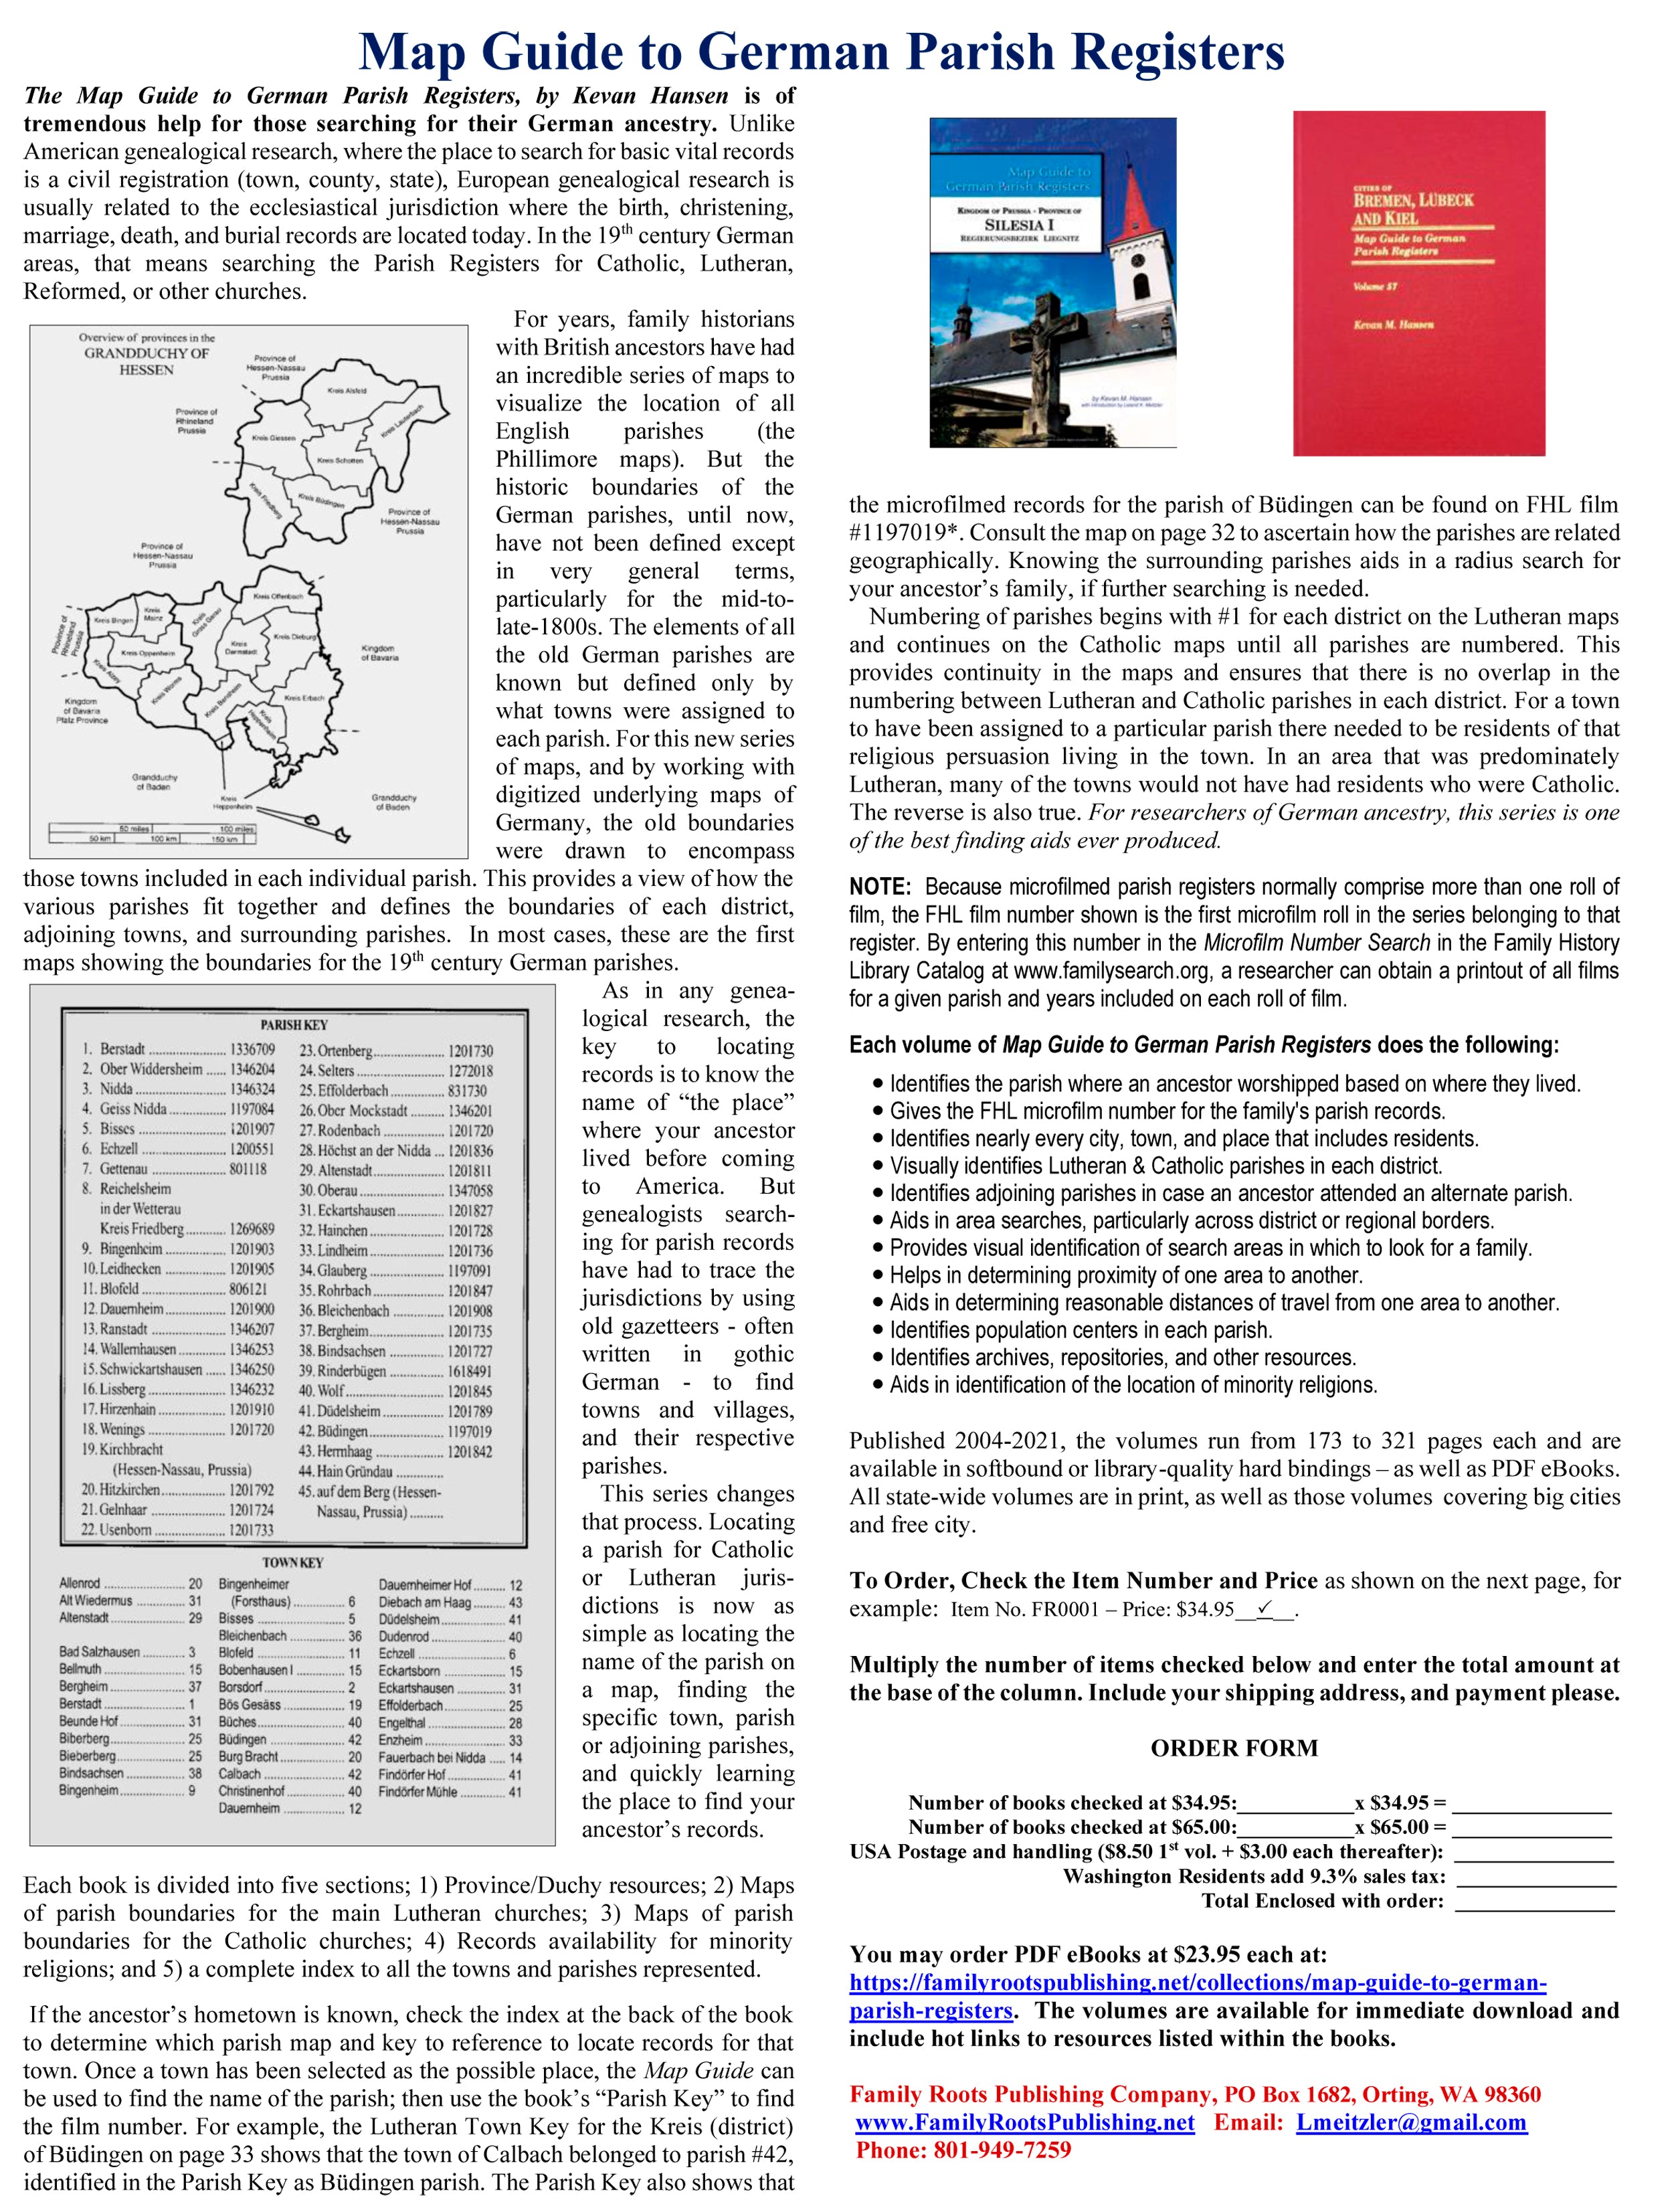 FREE FLYER: Downloadable PDF Flyer - Map Guide to German Parish Registers